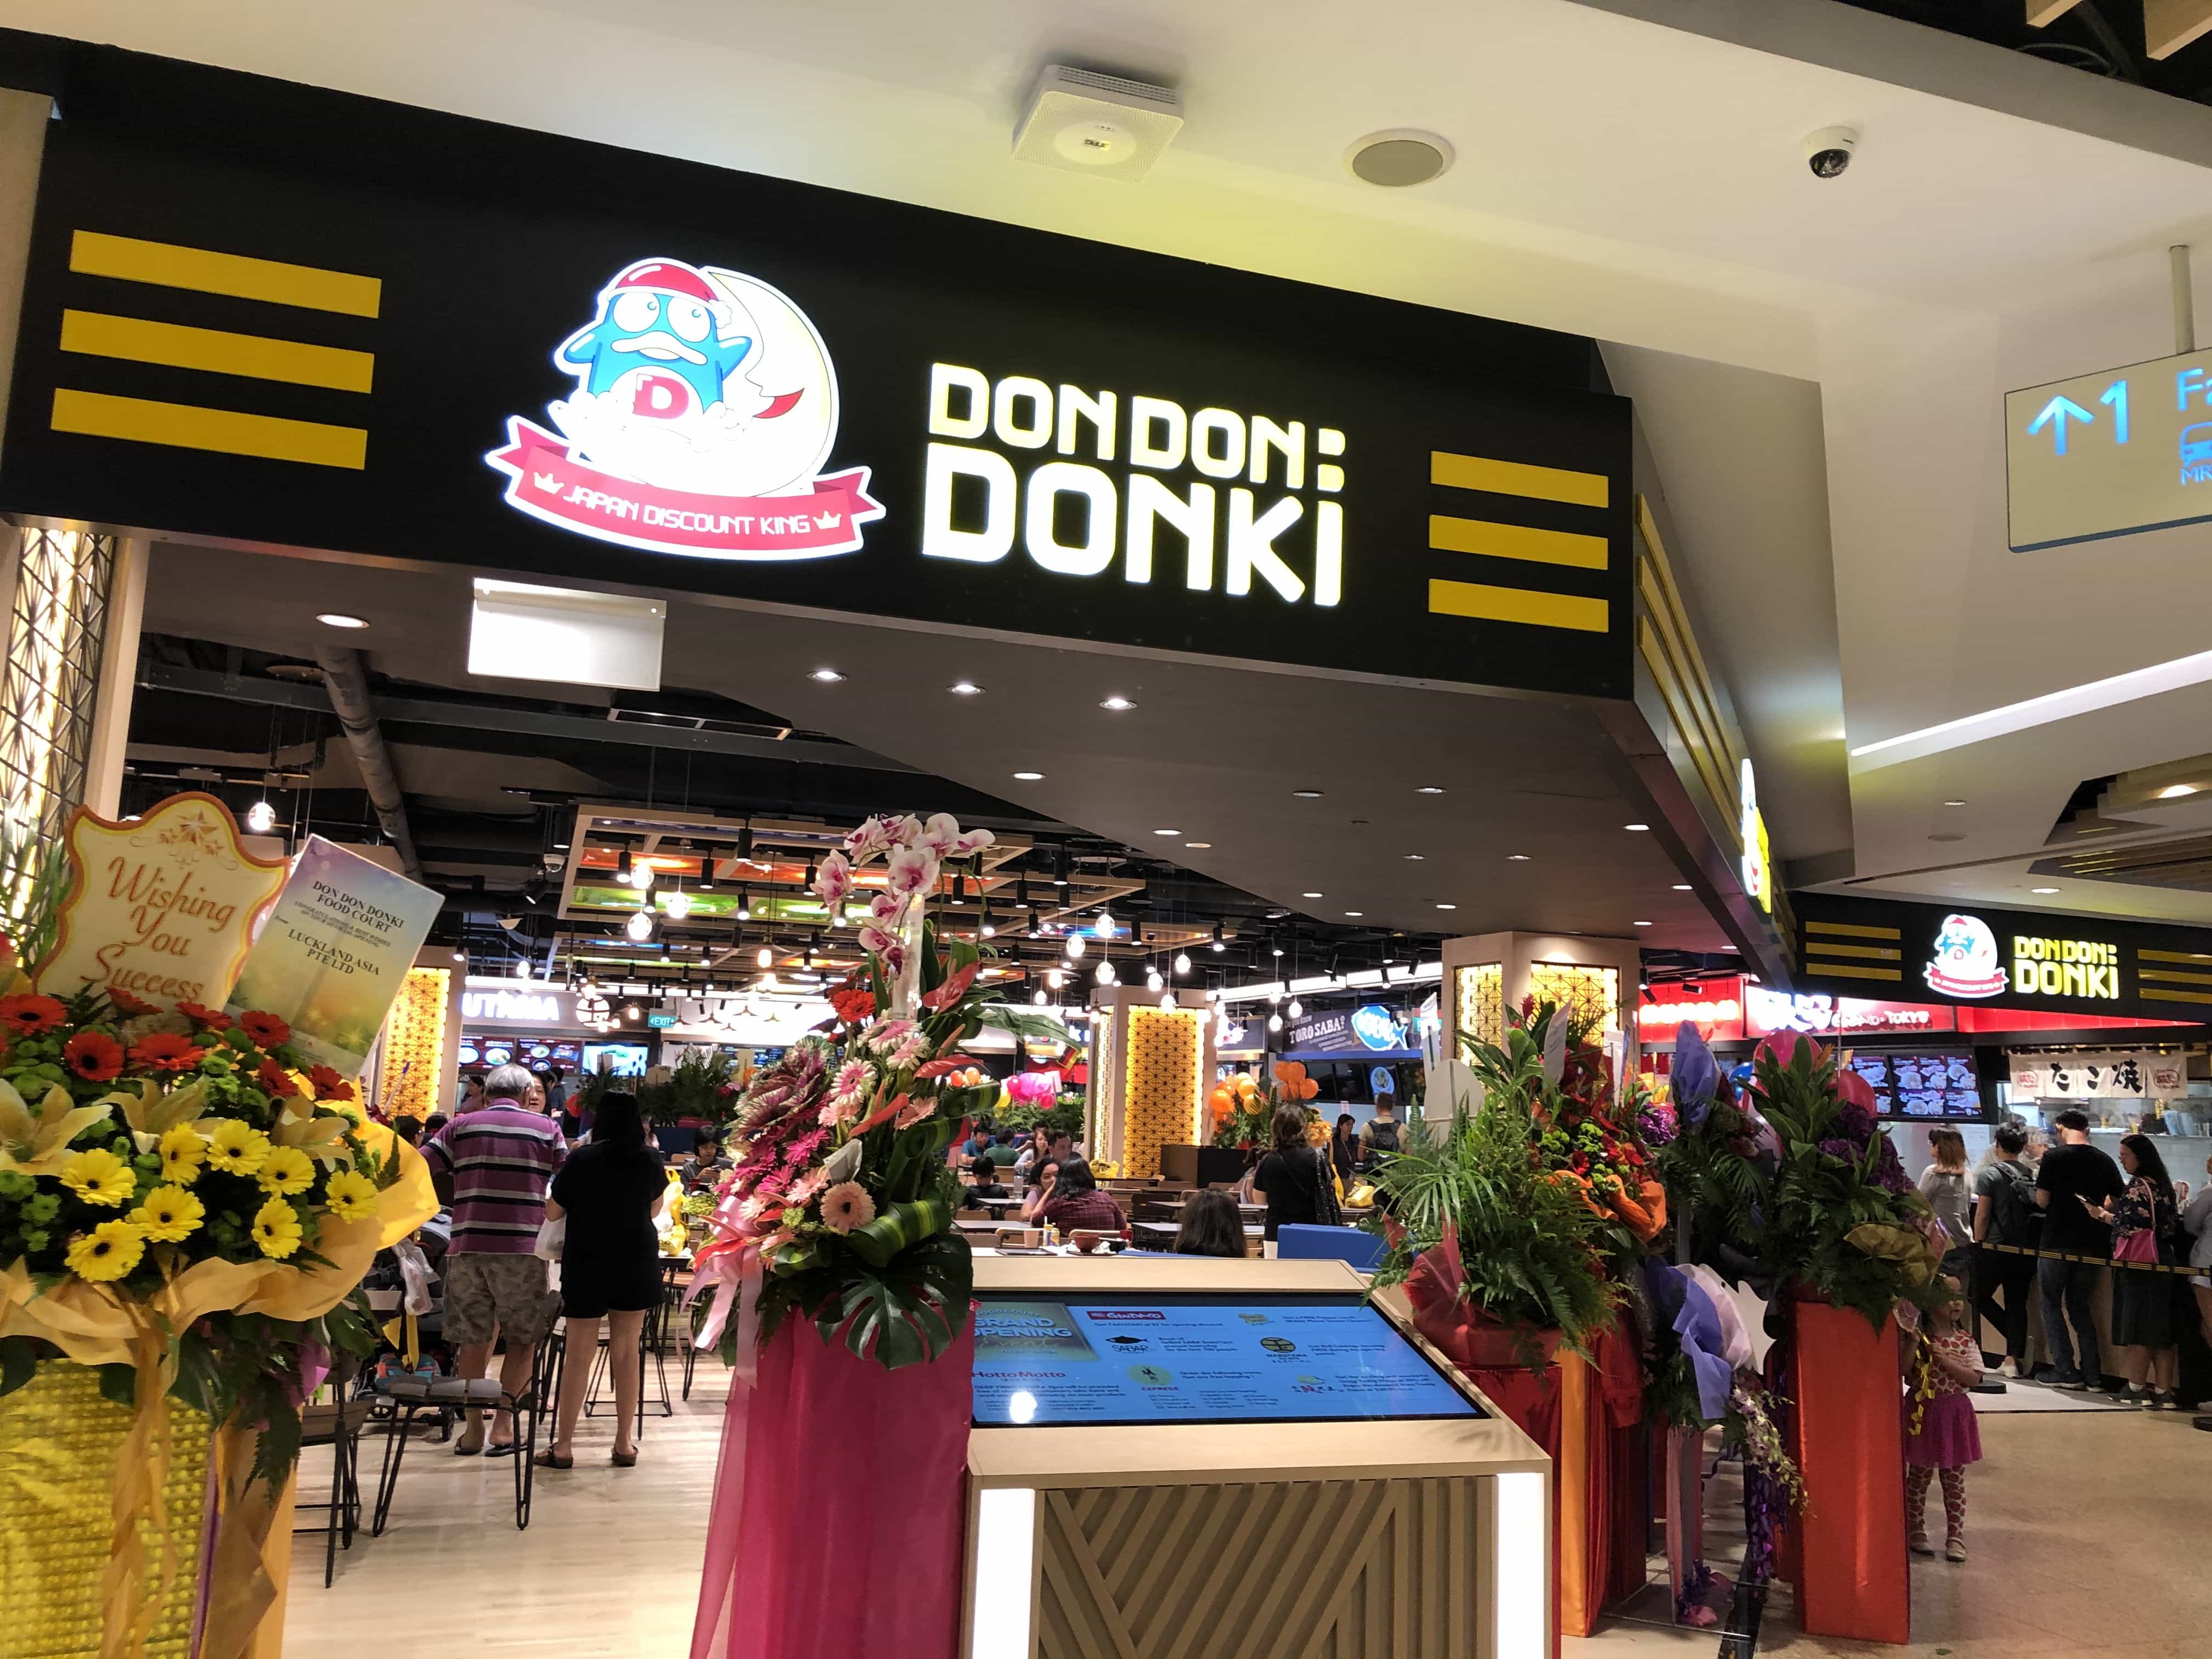 Dondondonki